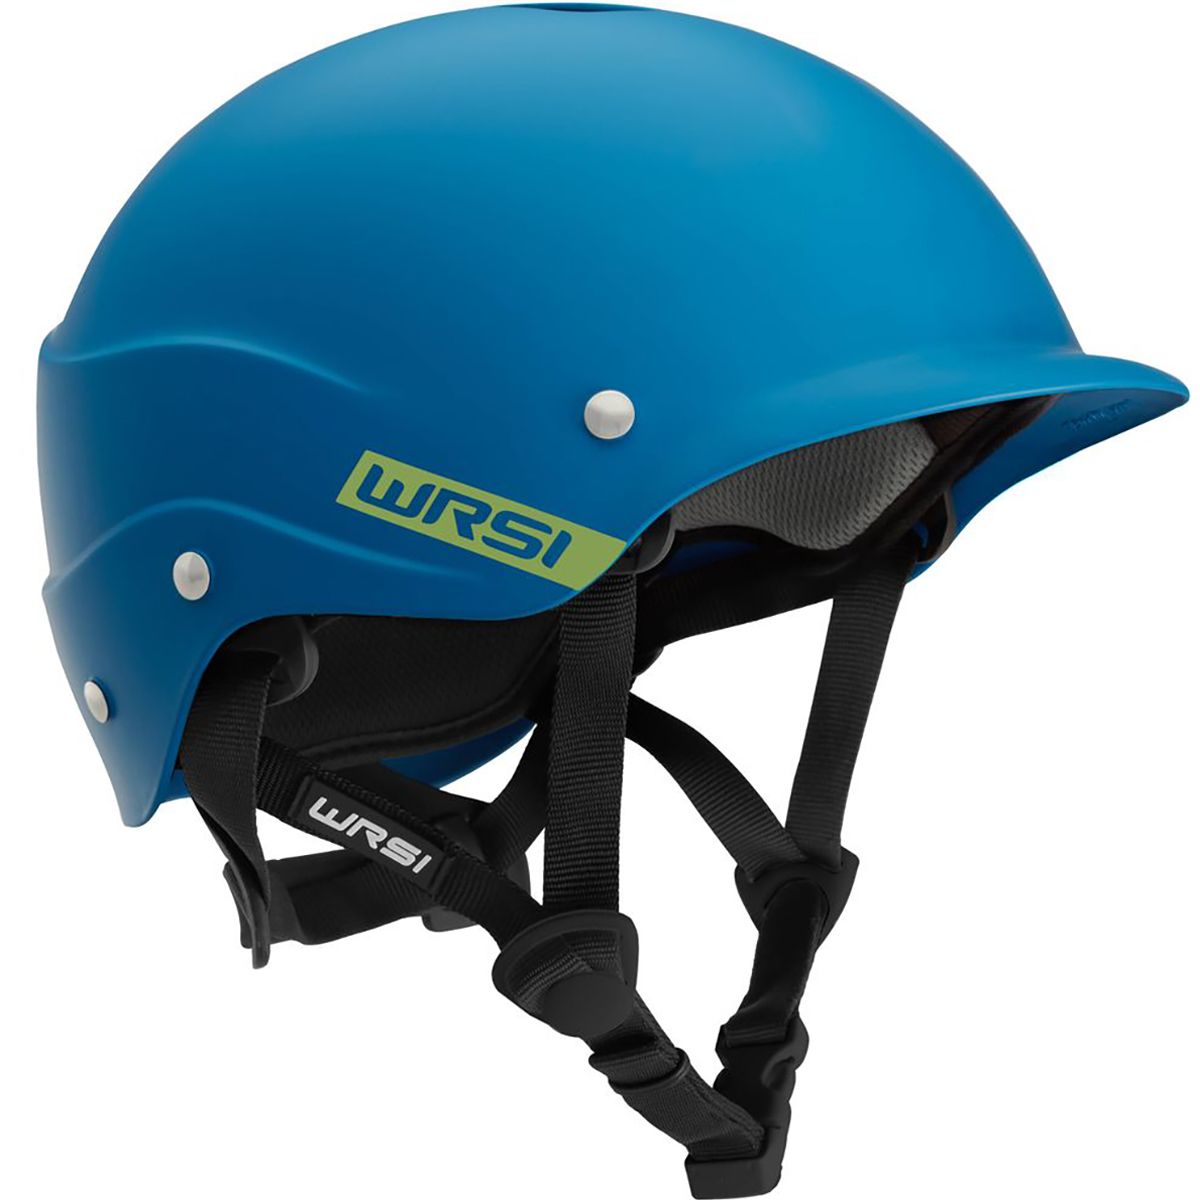 NRS WRSI Current Helmet 2020